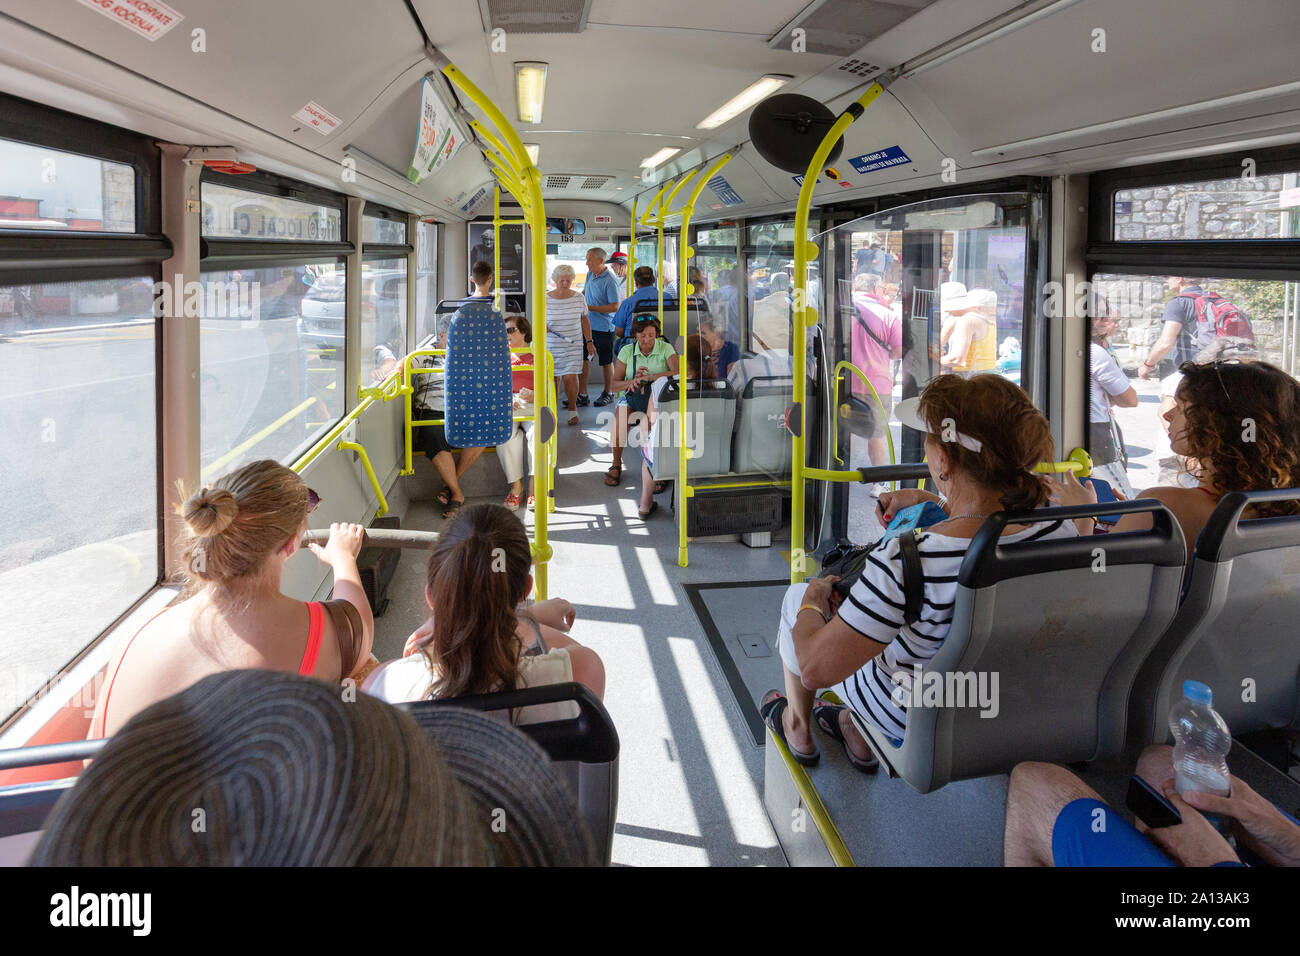 Croatia bus interior - bus passengers sitting inside in the interior of a local public transport bus, Dubrovnik Croatia Europe Stock Photo